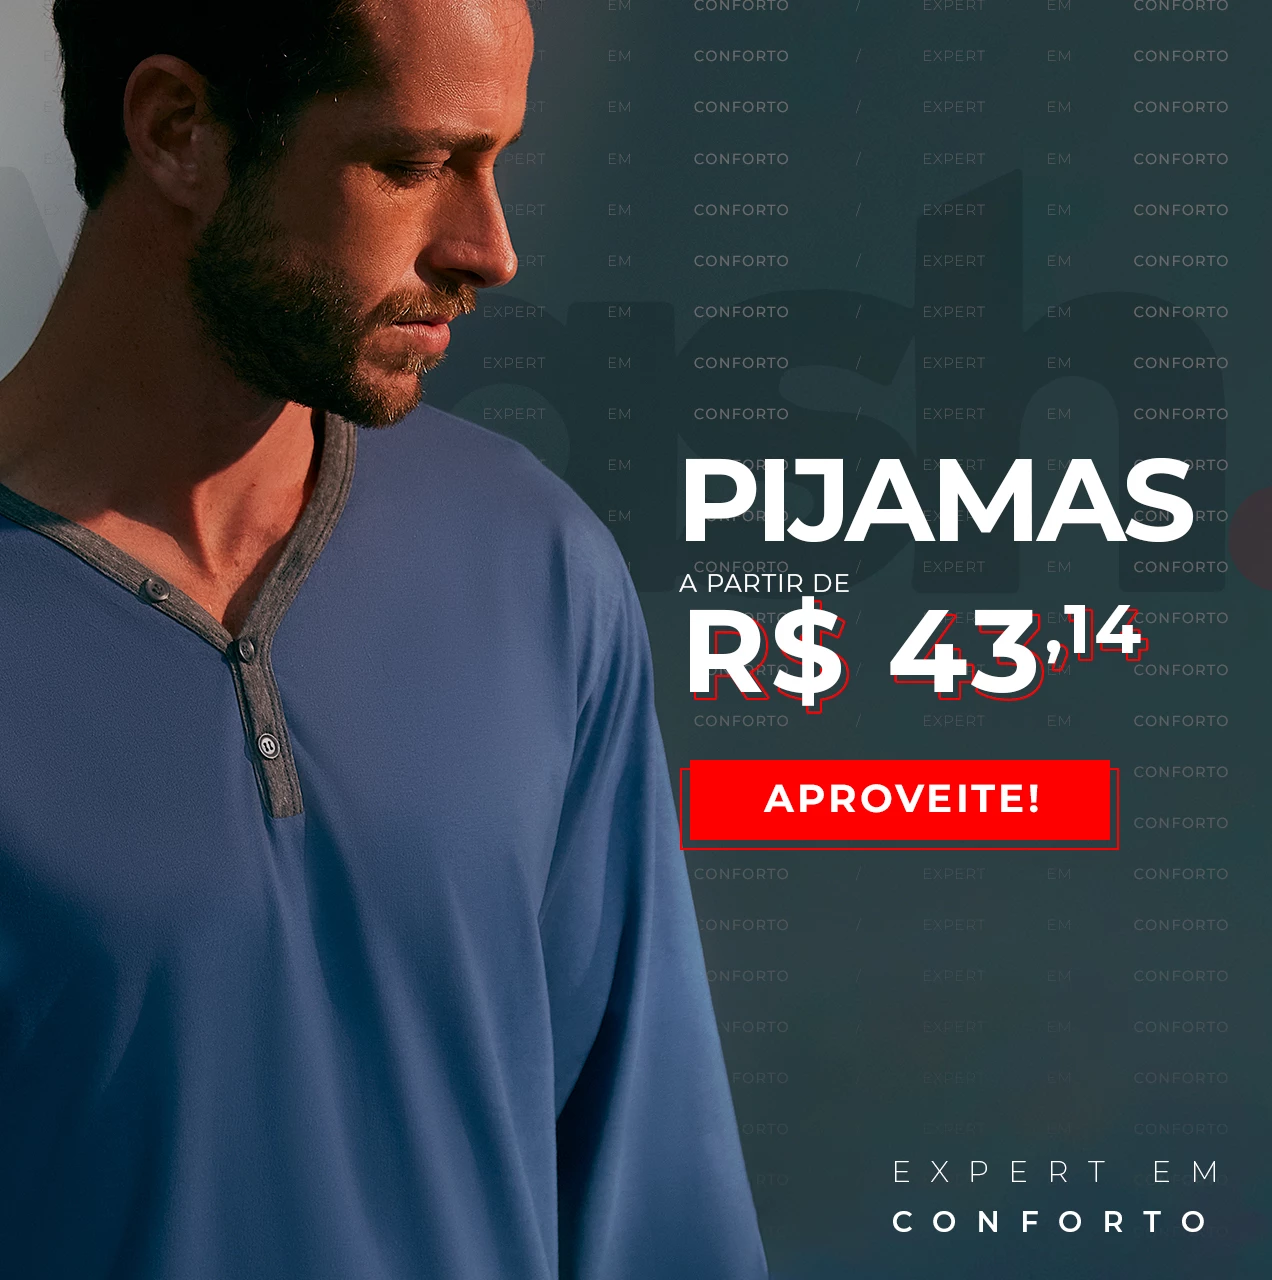 Pijamas - A partir de R$ 43,14